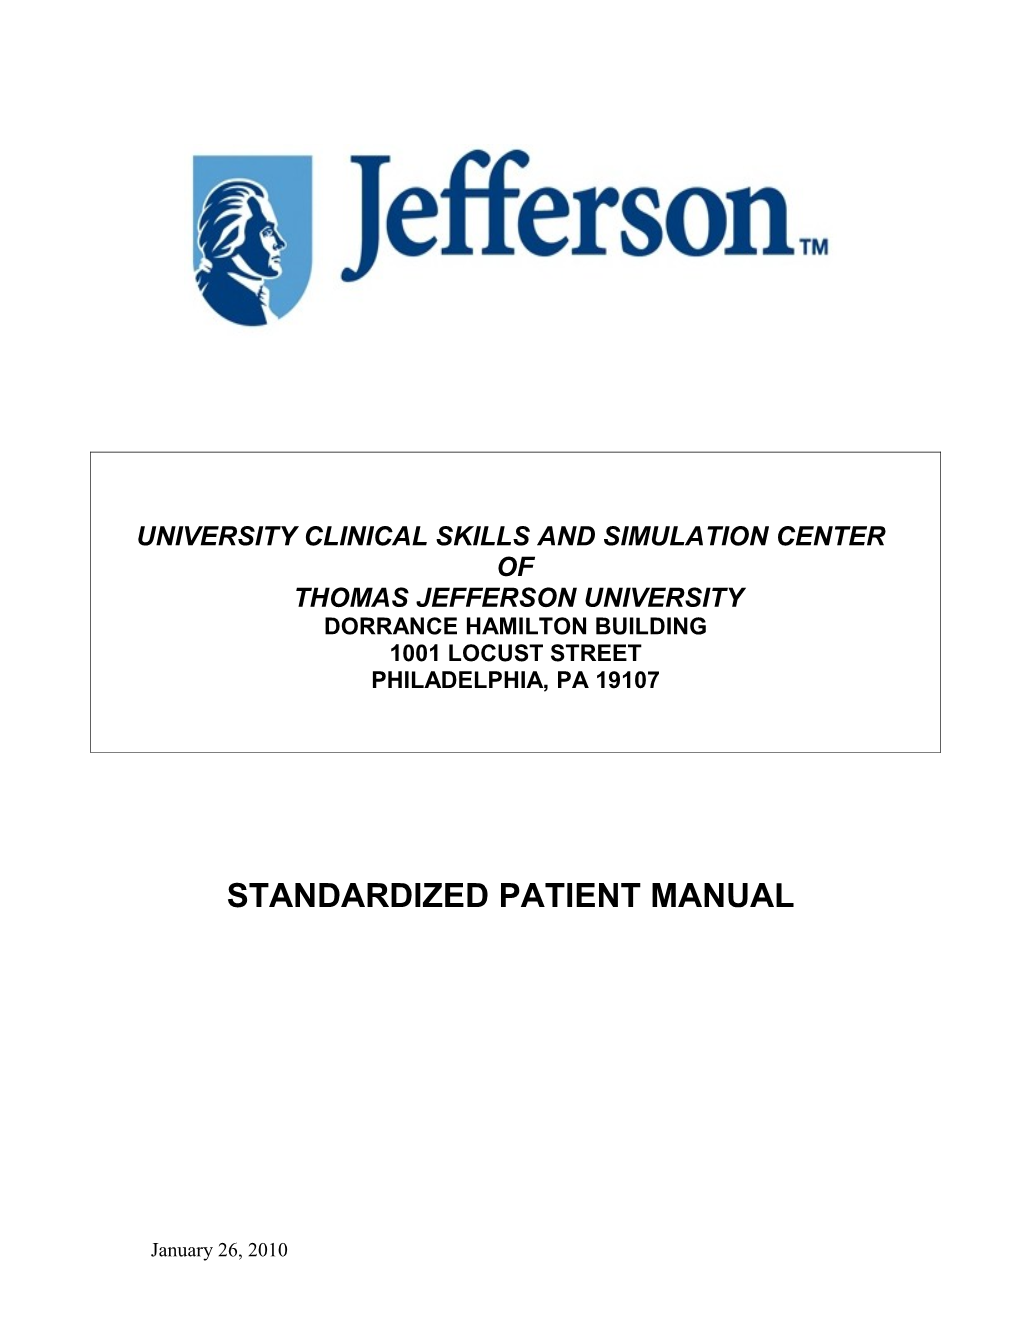 University Clinical Skills and Simulation Center of Thomas Jefferson University